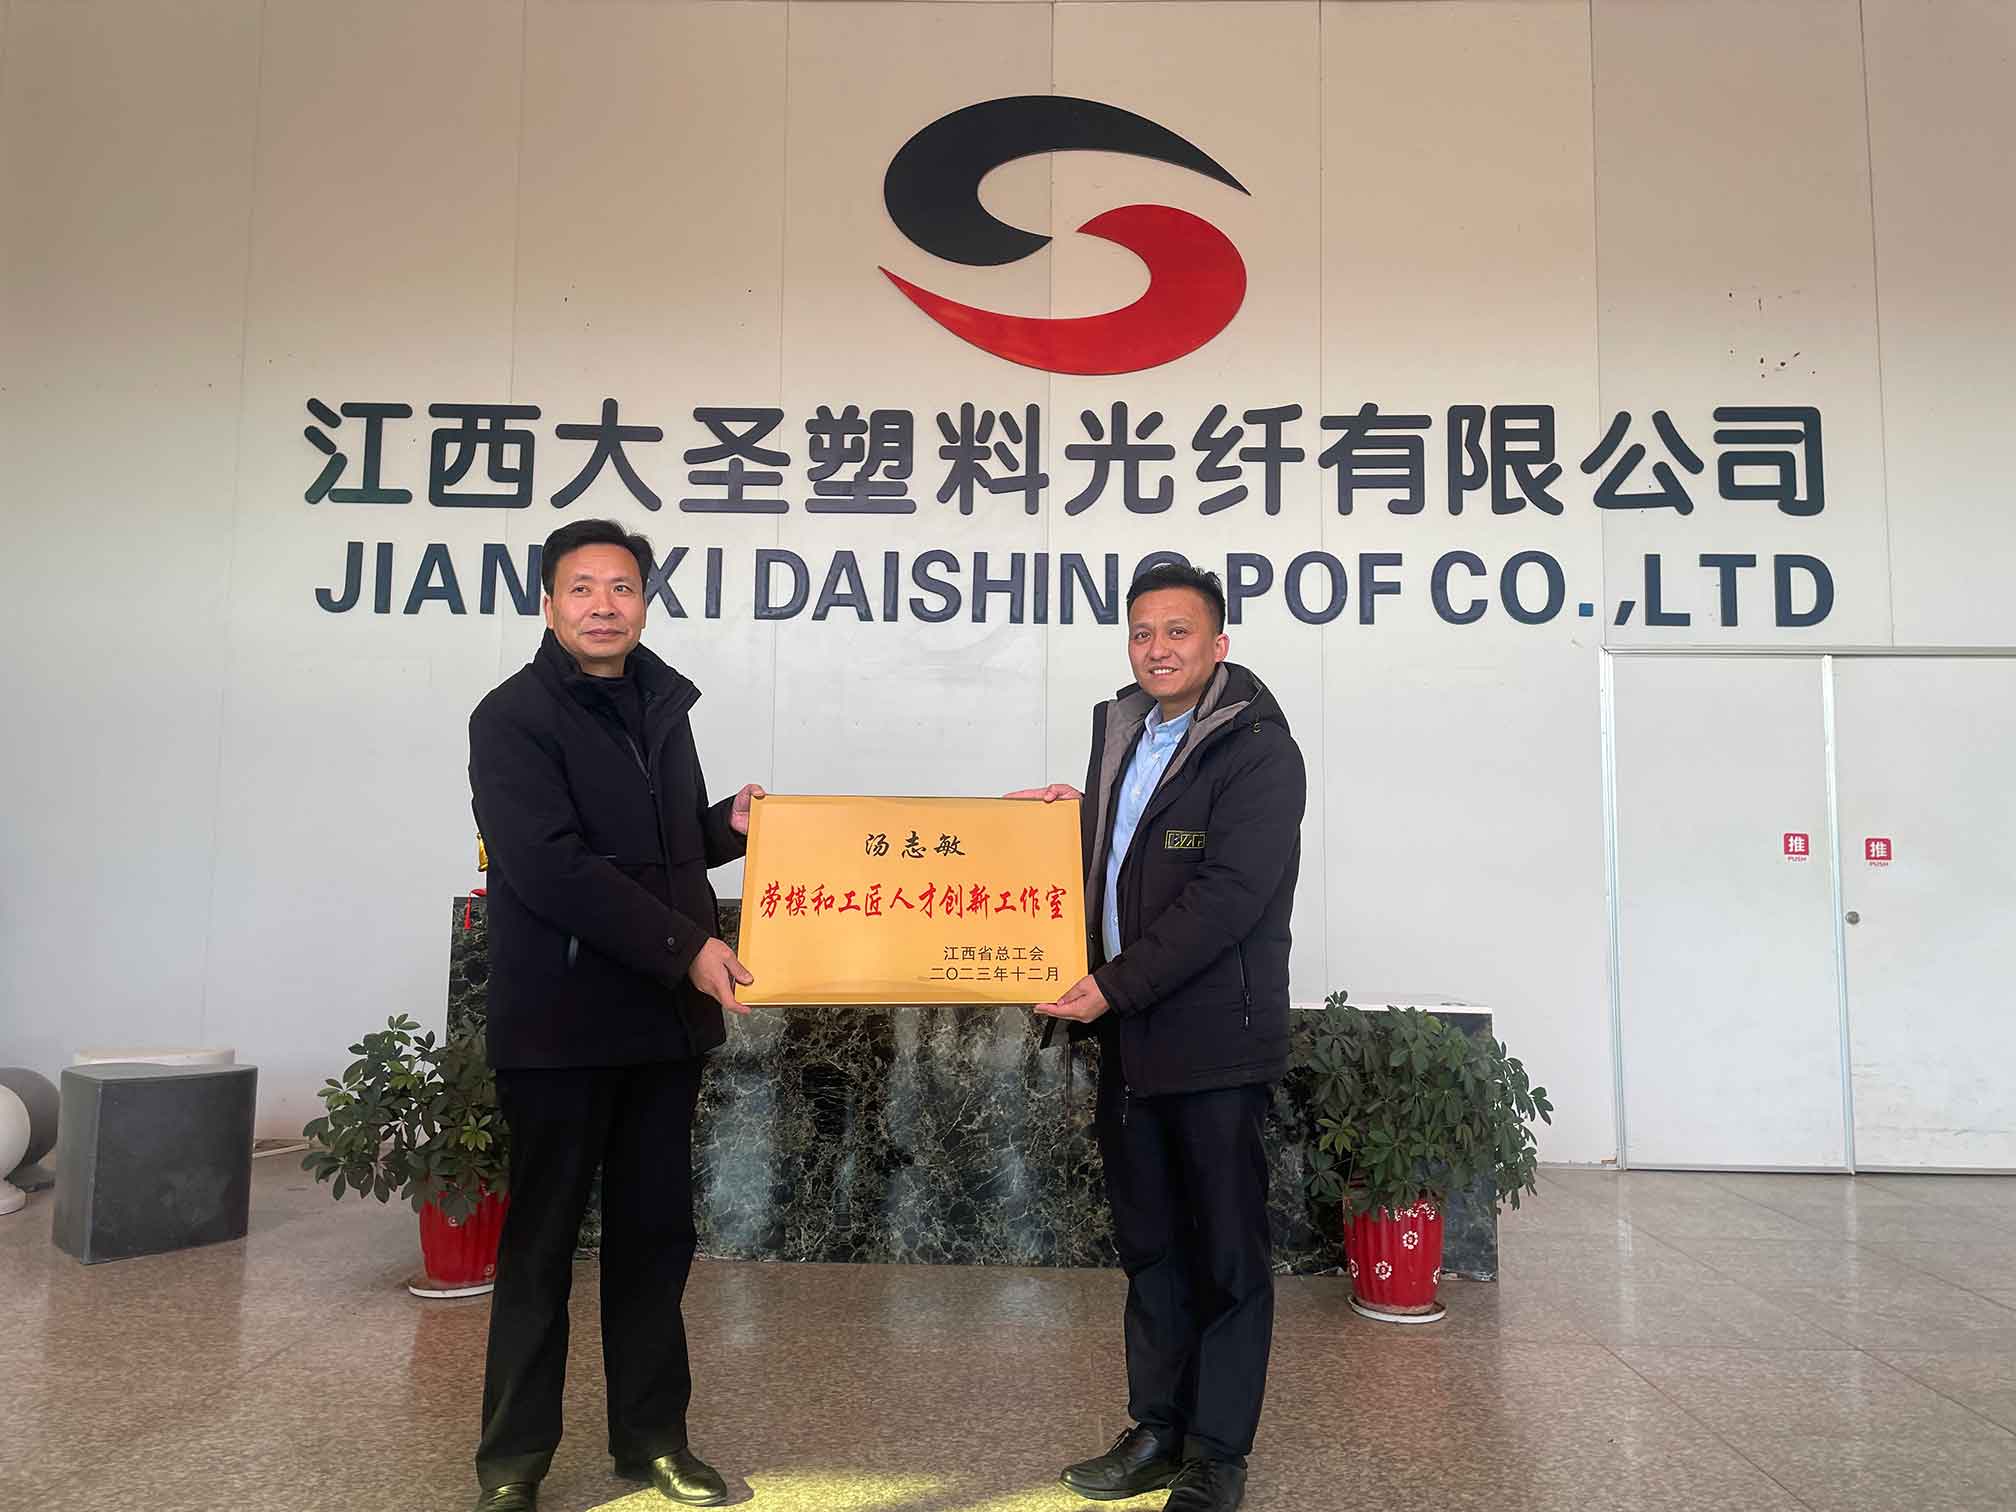 Amazing| Jiangxi Daishing POF Co.,LTD. "Tang Zhimin Model Worker Innovation Studio" was awarded the title of "Jiangxi Province Model Worker and Craftsman Talent Innovation Studio"